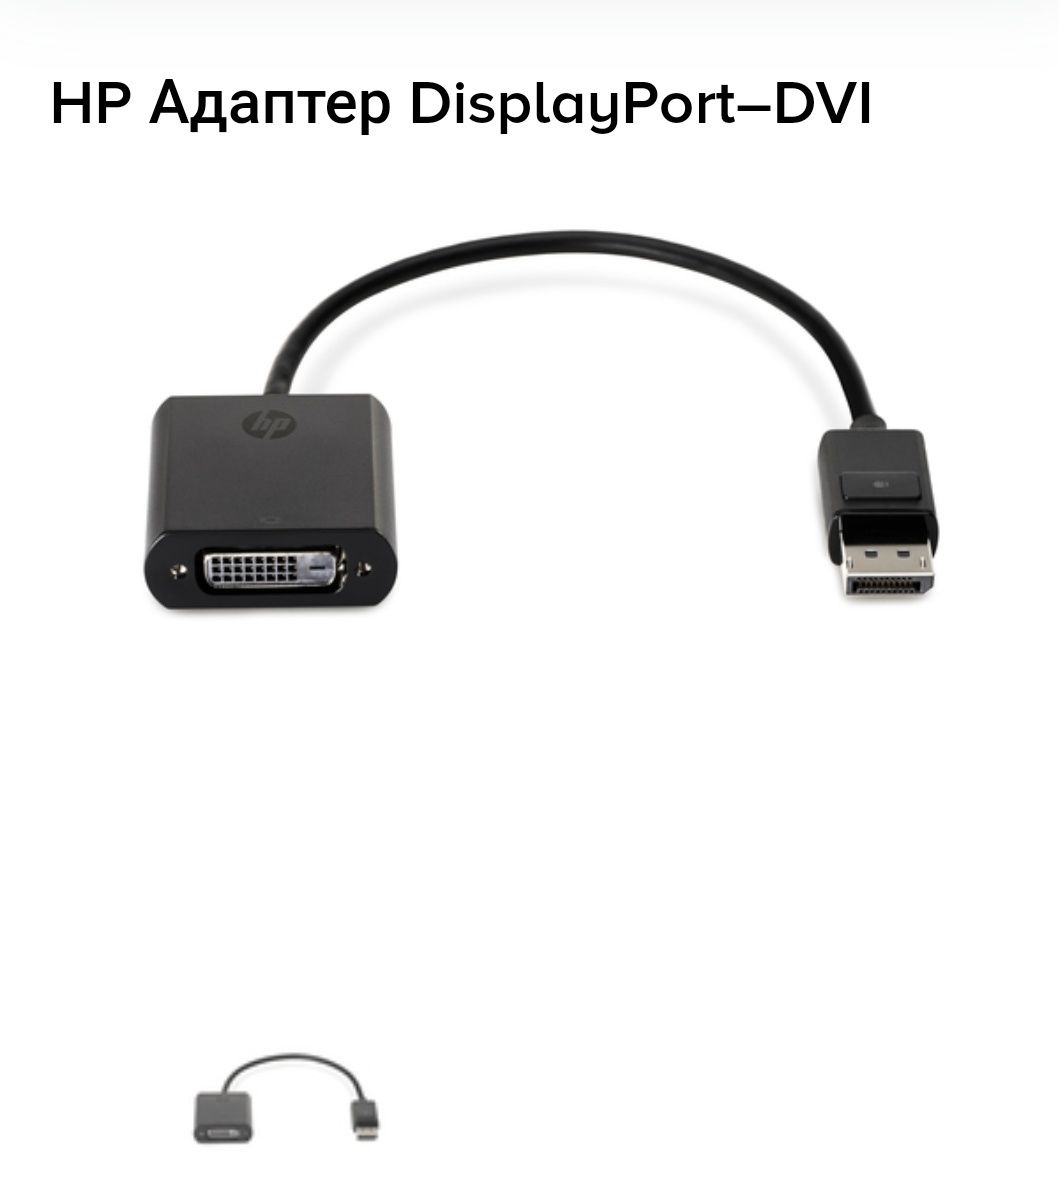 Display Port to DVI